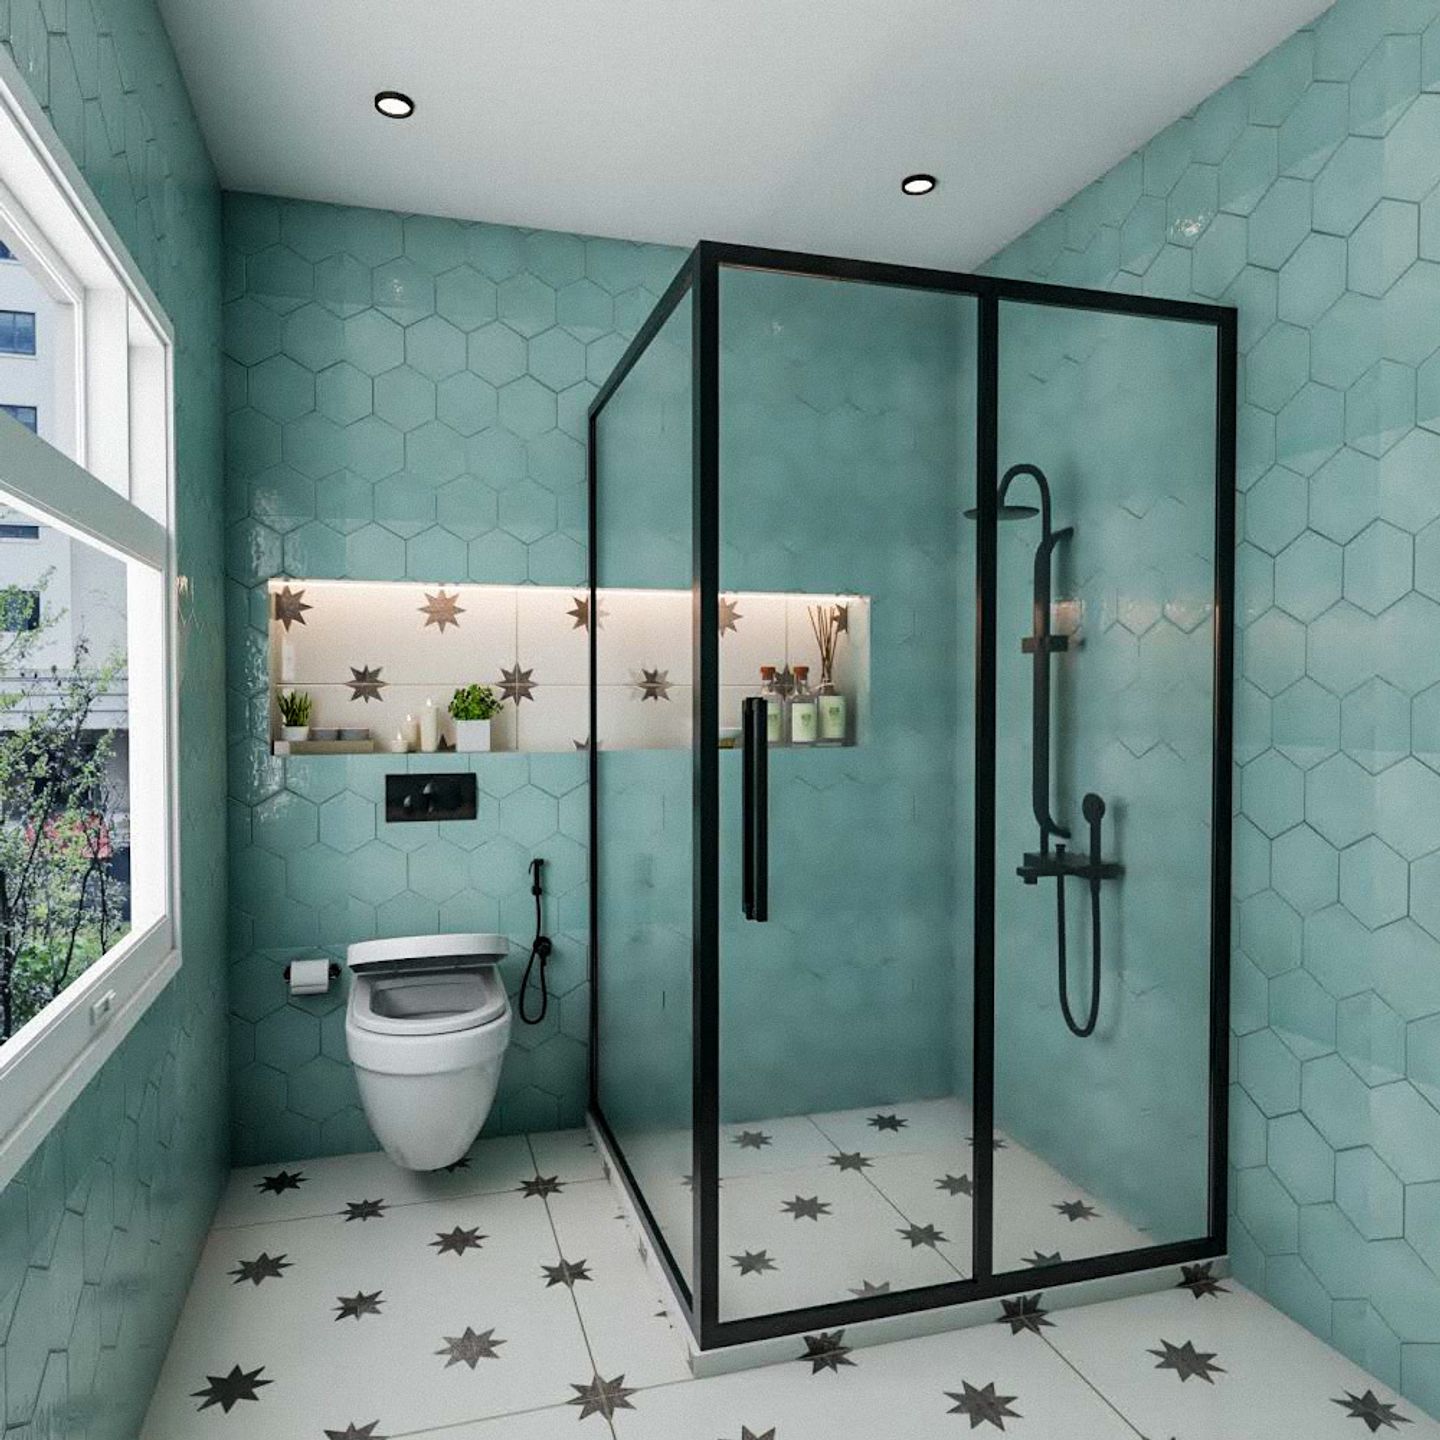 Bathroom Tiles With Hexagonal-Shape And Sea-Green Hues - Livspace